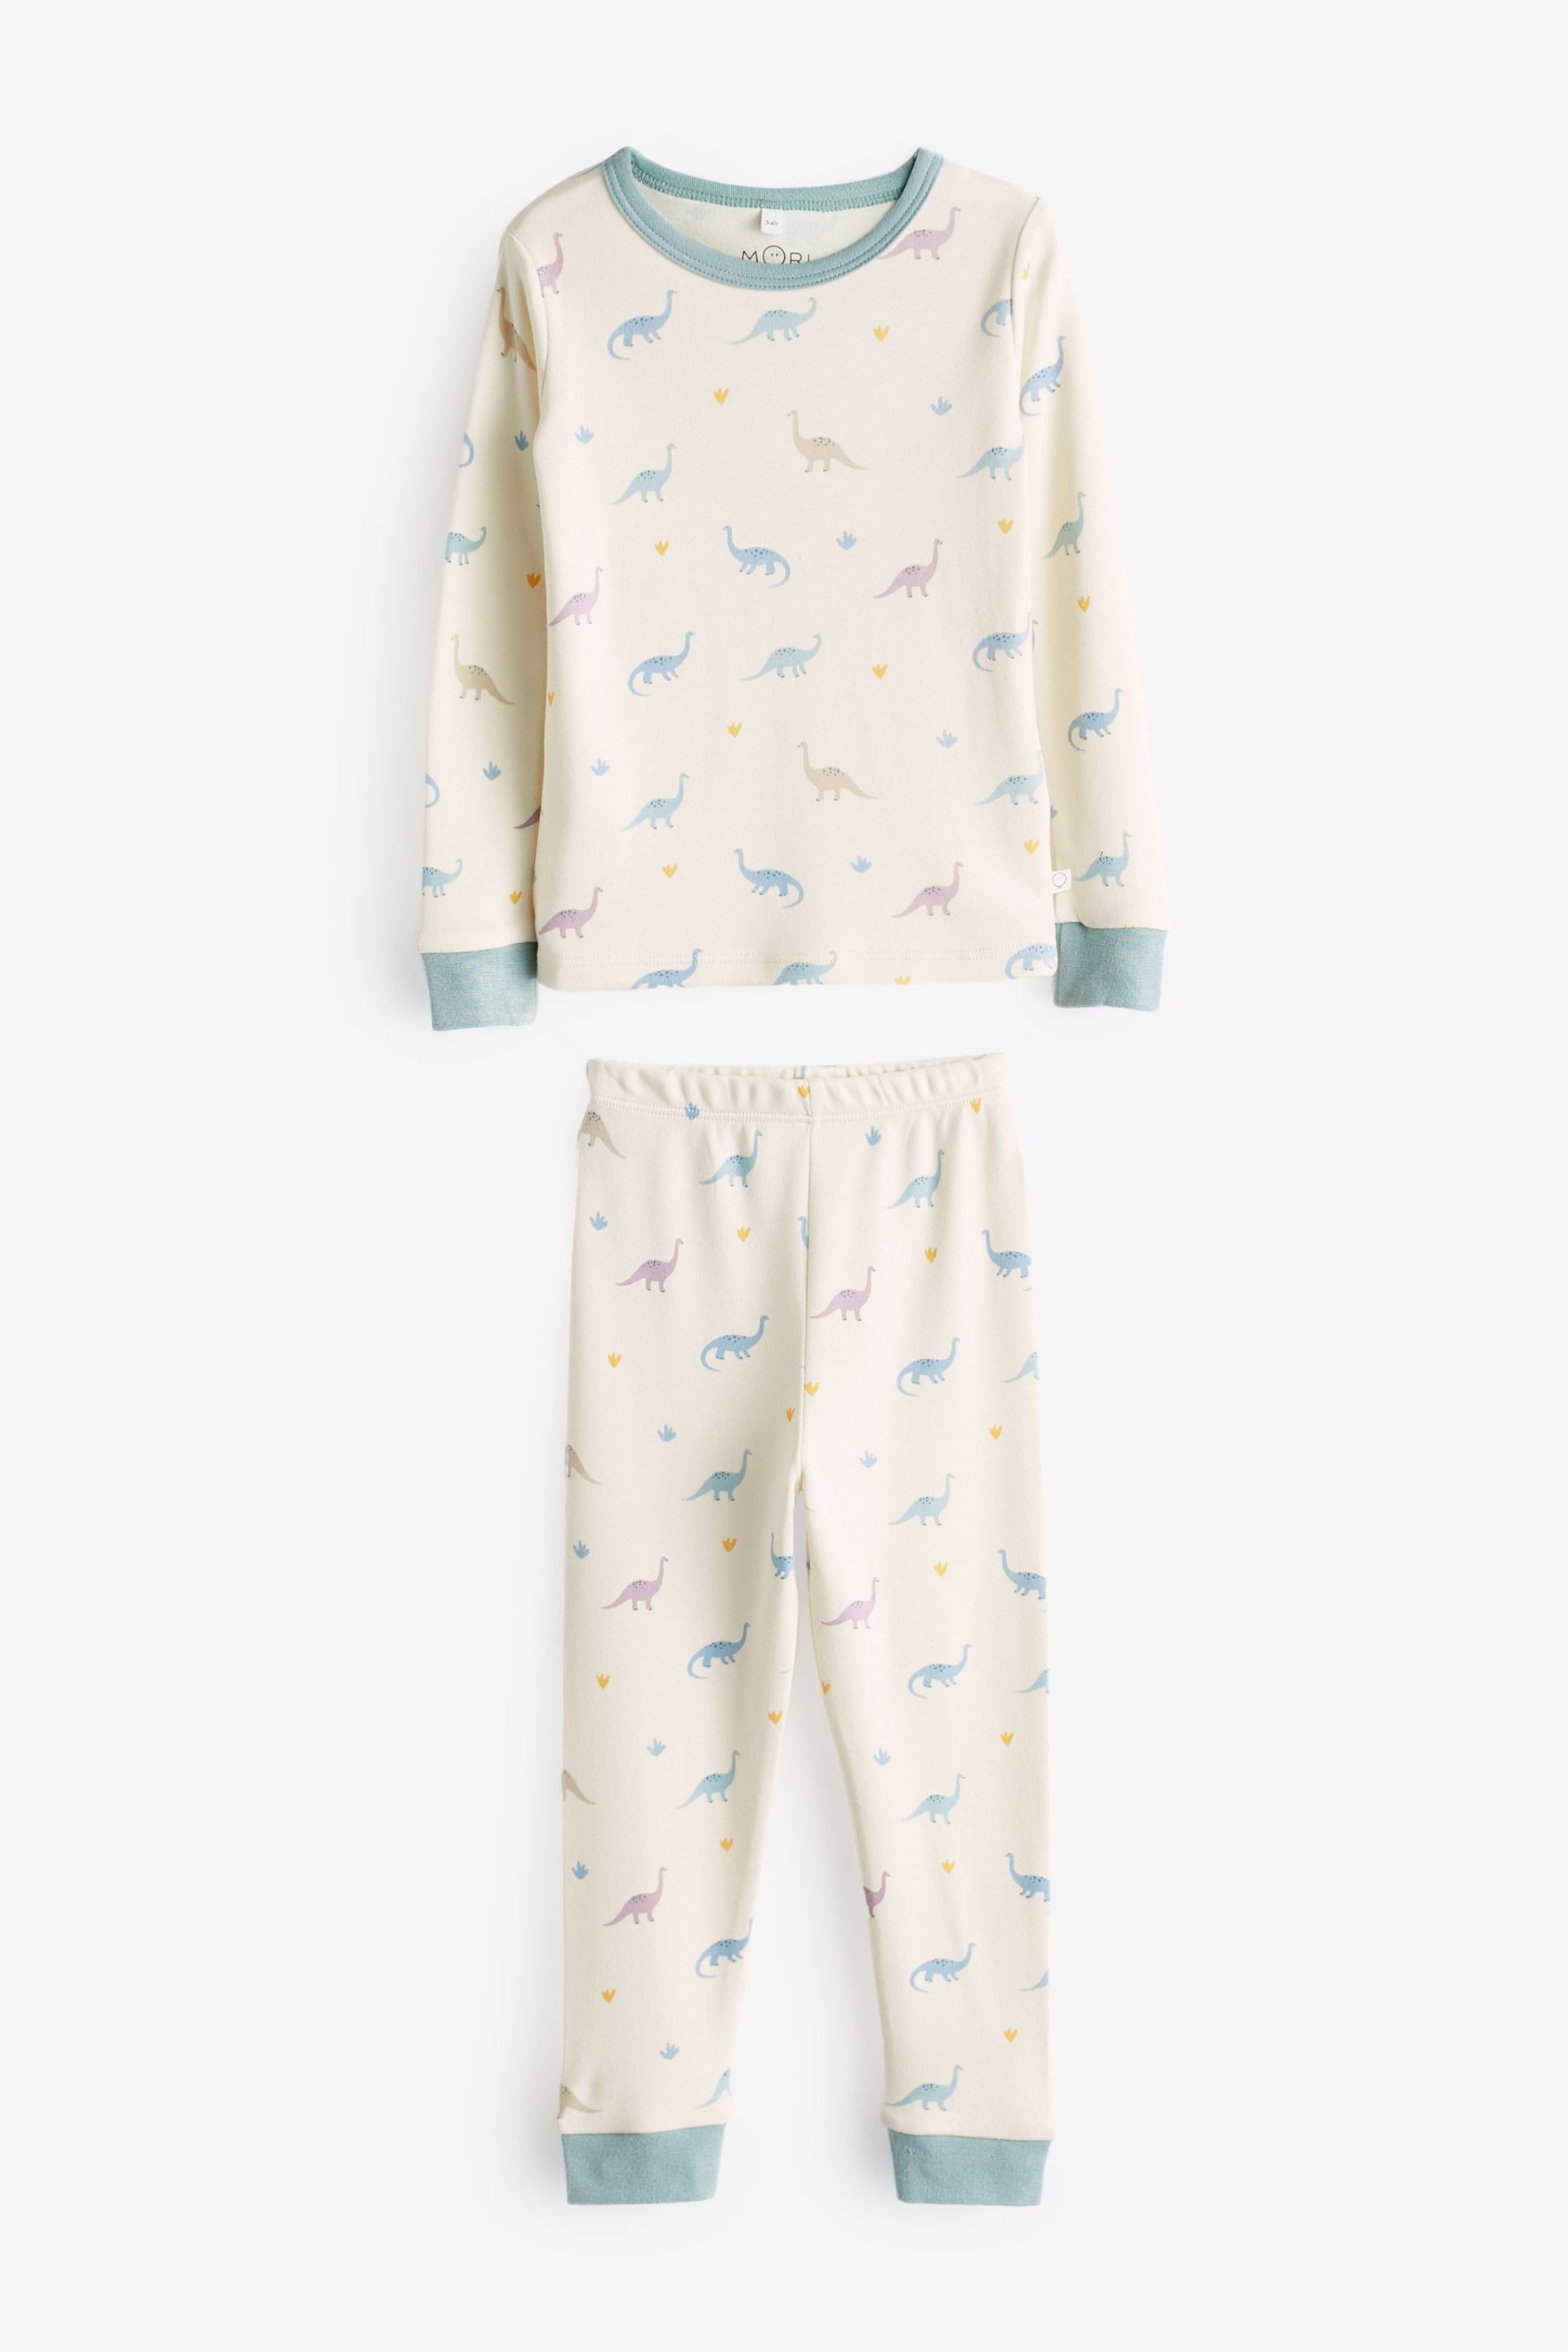 MORI Cream Organic Cotton & Bamboo Long Sleeve Pyjamas - Image 5 of 7